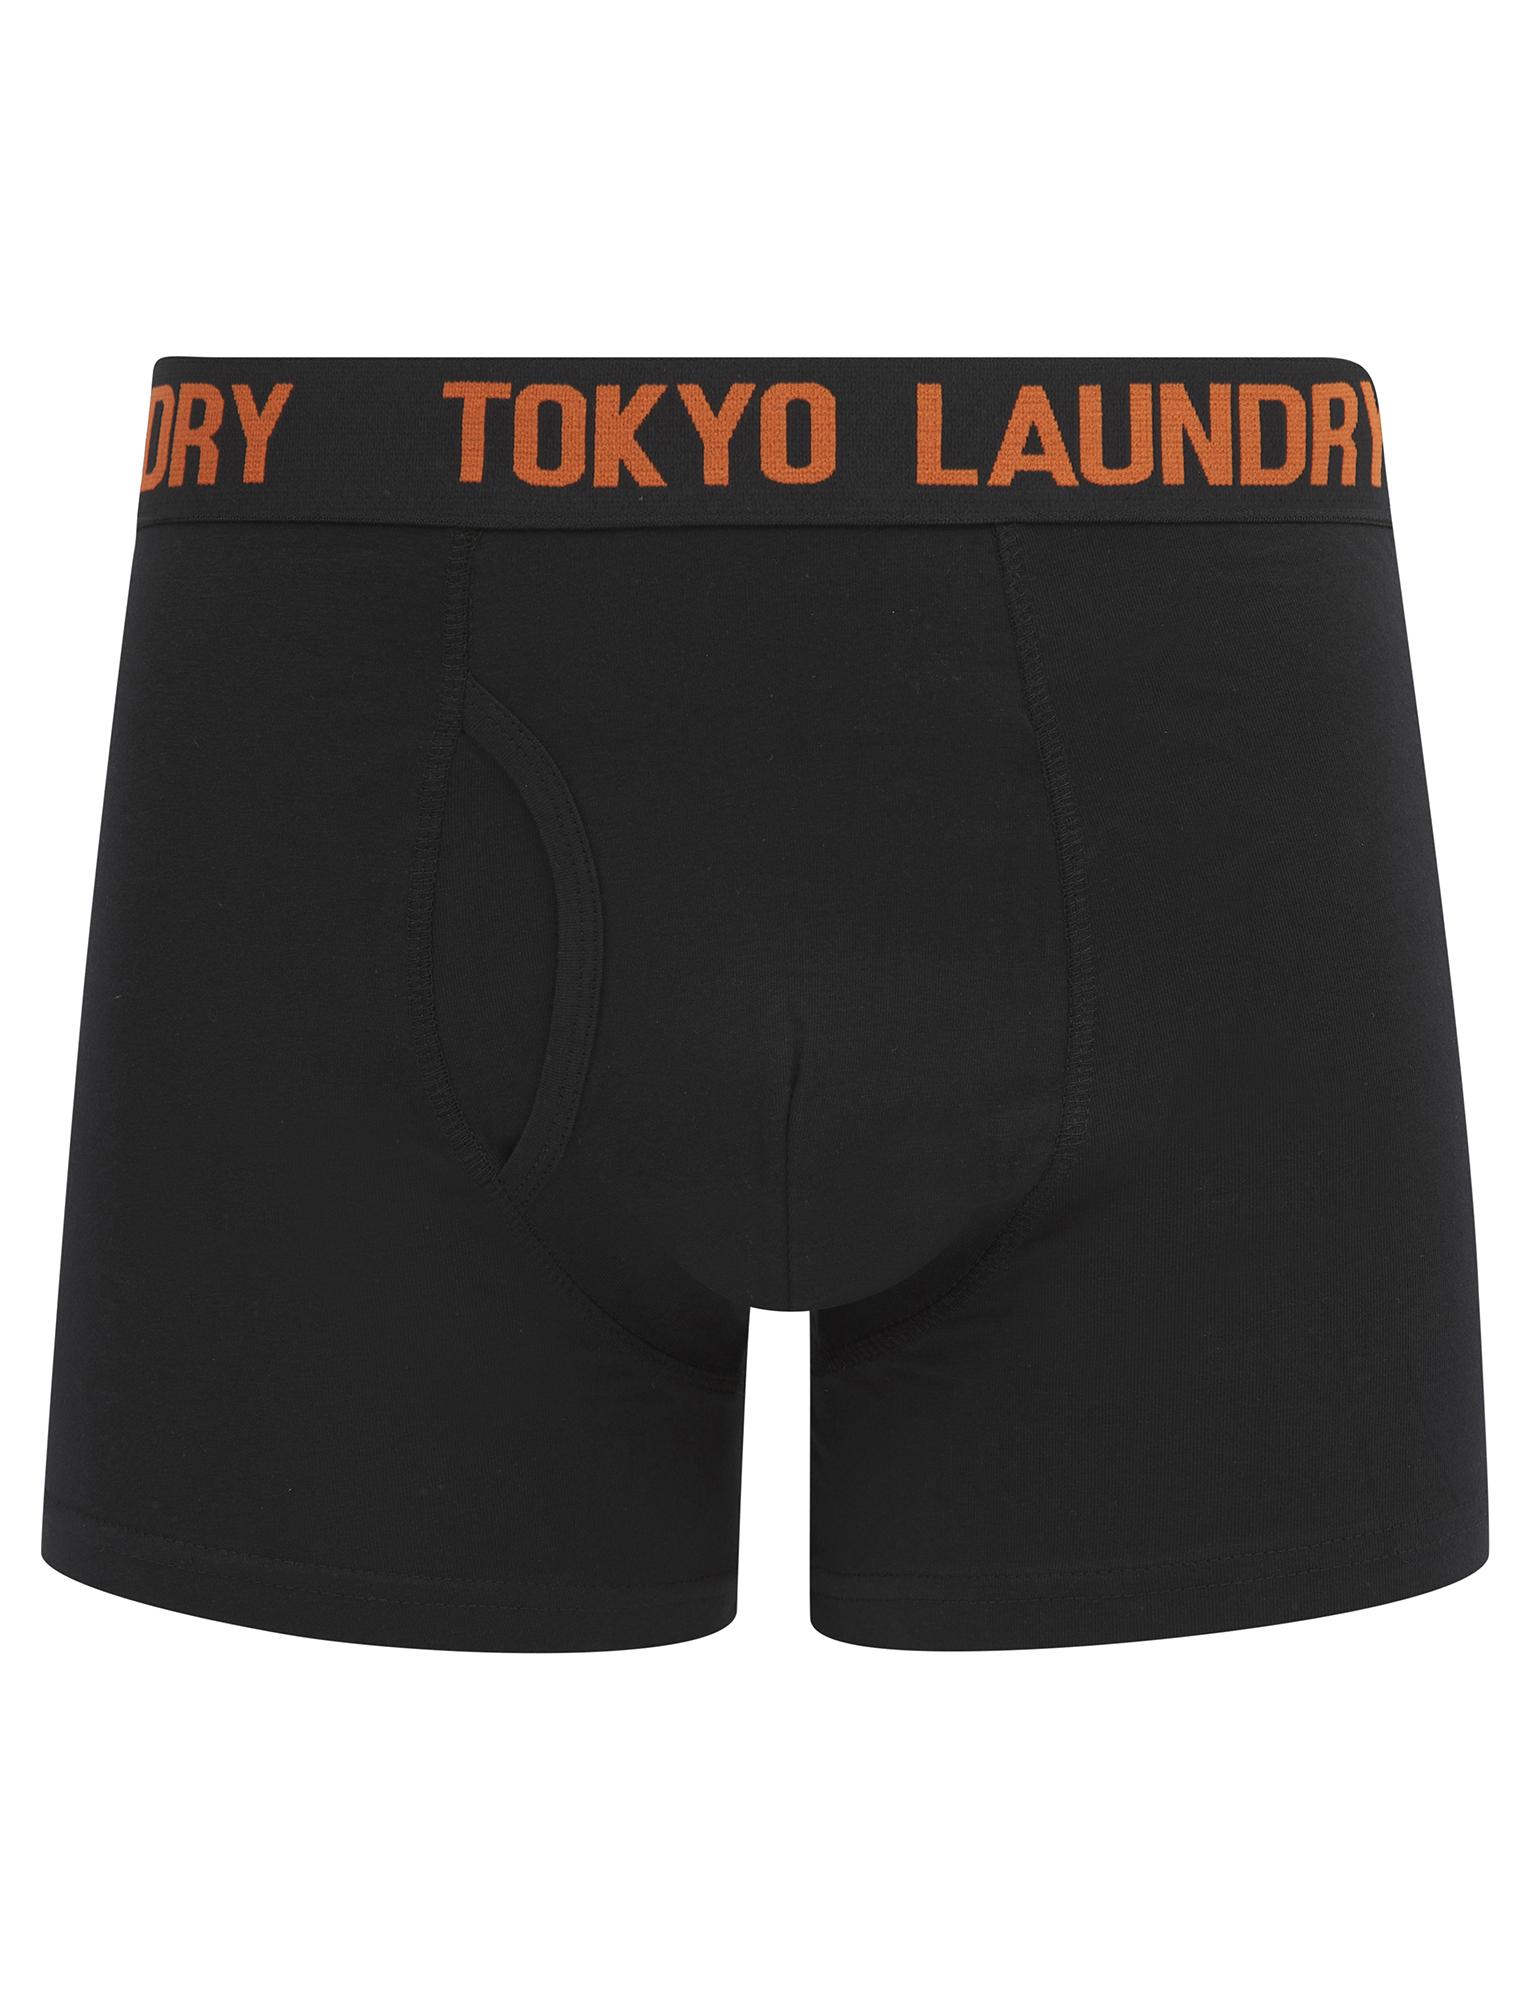 Tokyo Laundry Mens Boxers 6 Pack Boxer Shorts Set Black Stretch Cotton  Underwear